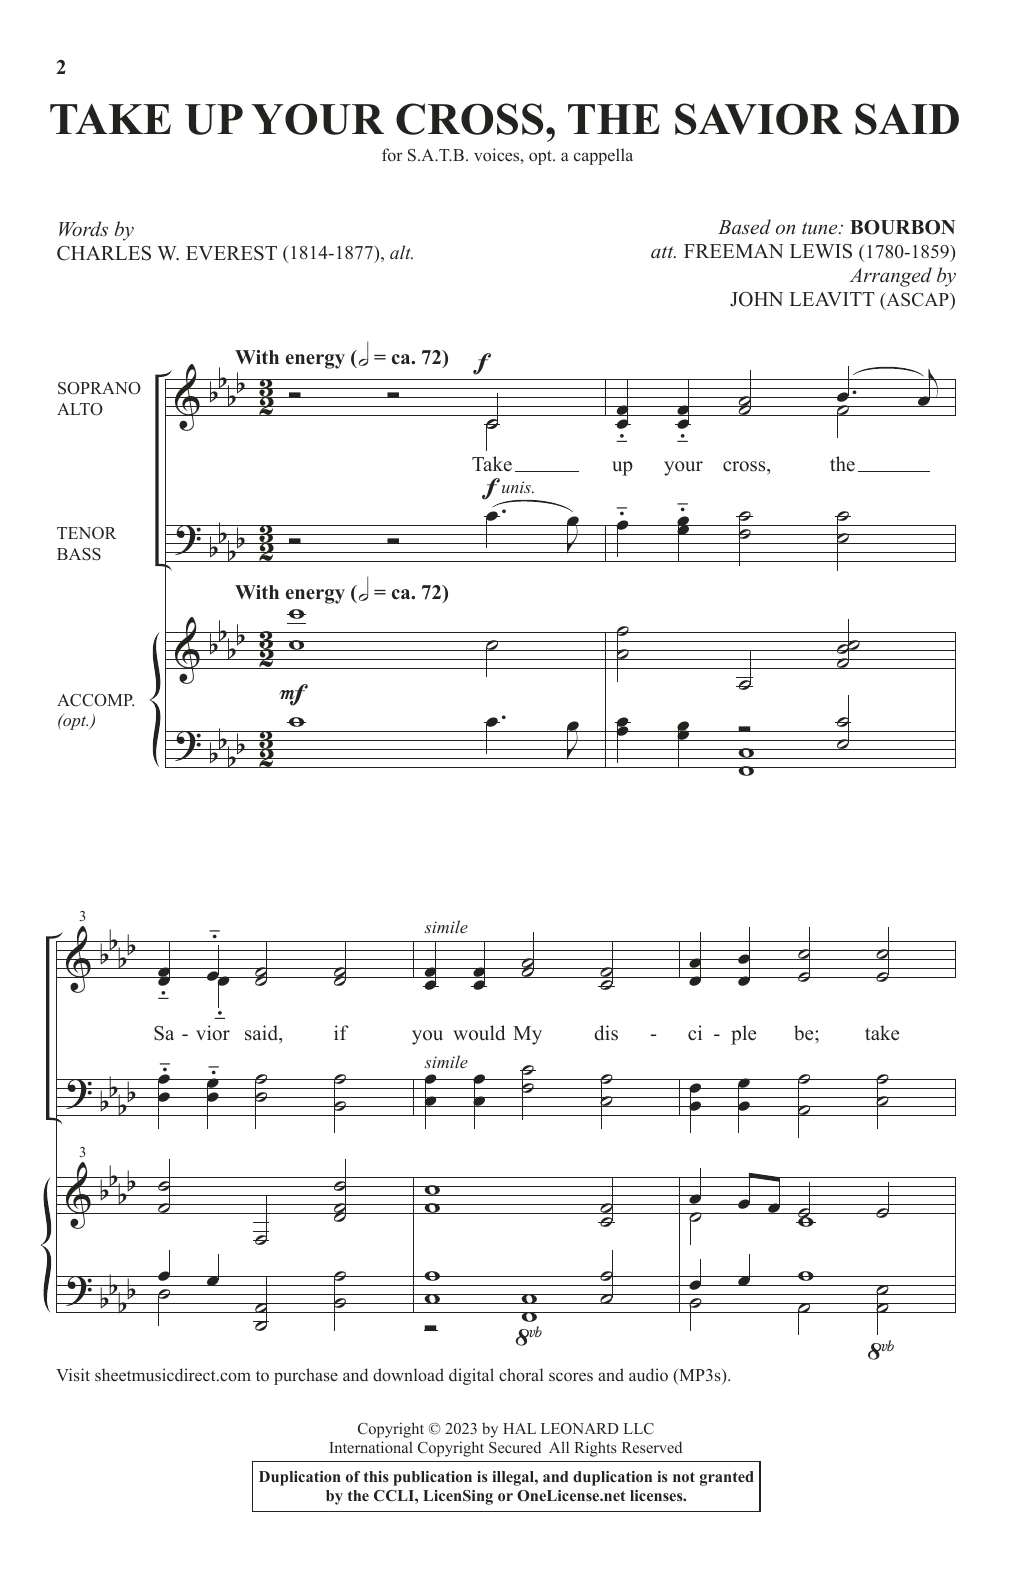 Charles W. Everest, alt. Take Up Your Cross, The Savior Said (arr. John Leavitt) Sheet Music Notes & Chords for SATB Choir - Download or Print PDF